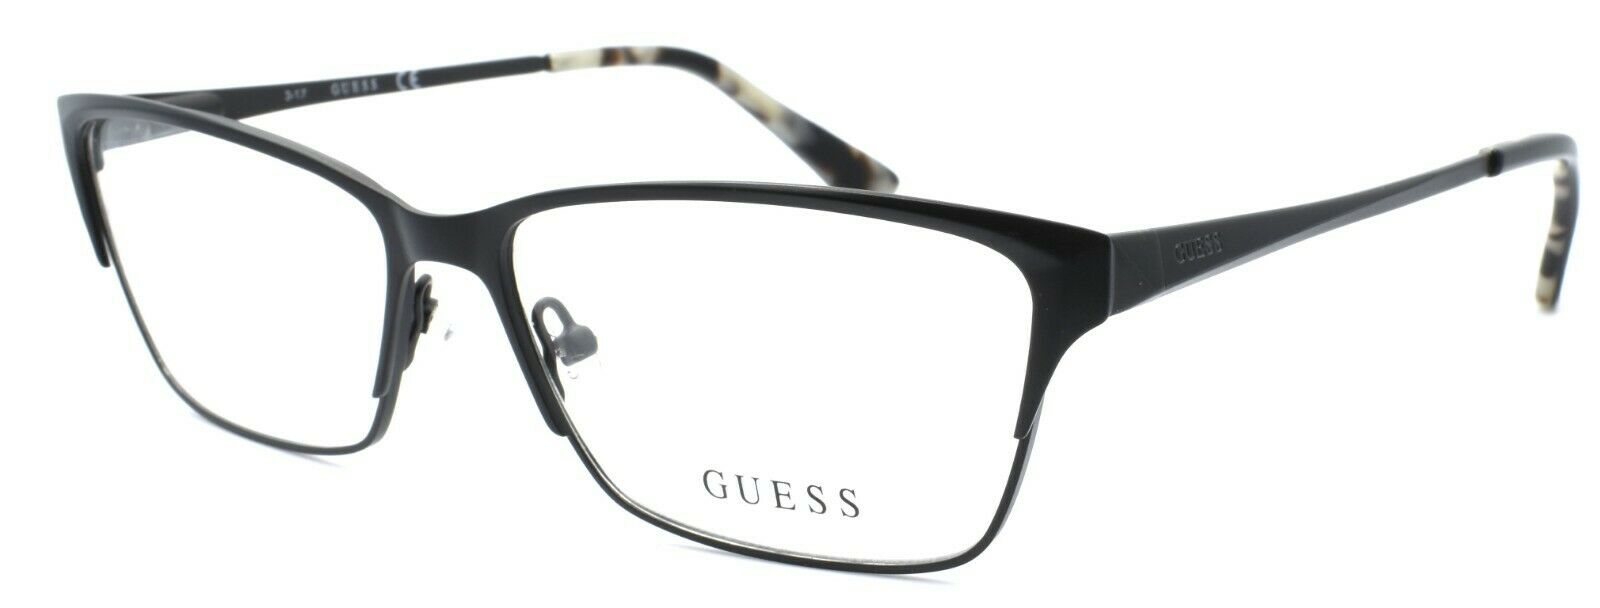 1-GUESS GU2605 002 Women's Eyeglasses Frames 55-14-140 Matte Black + Case-664689884254-IKSpecs